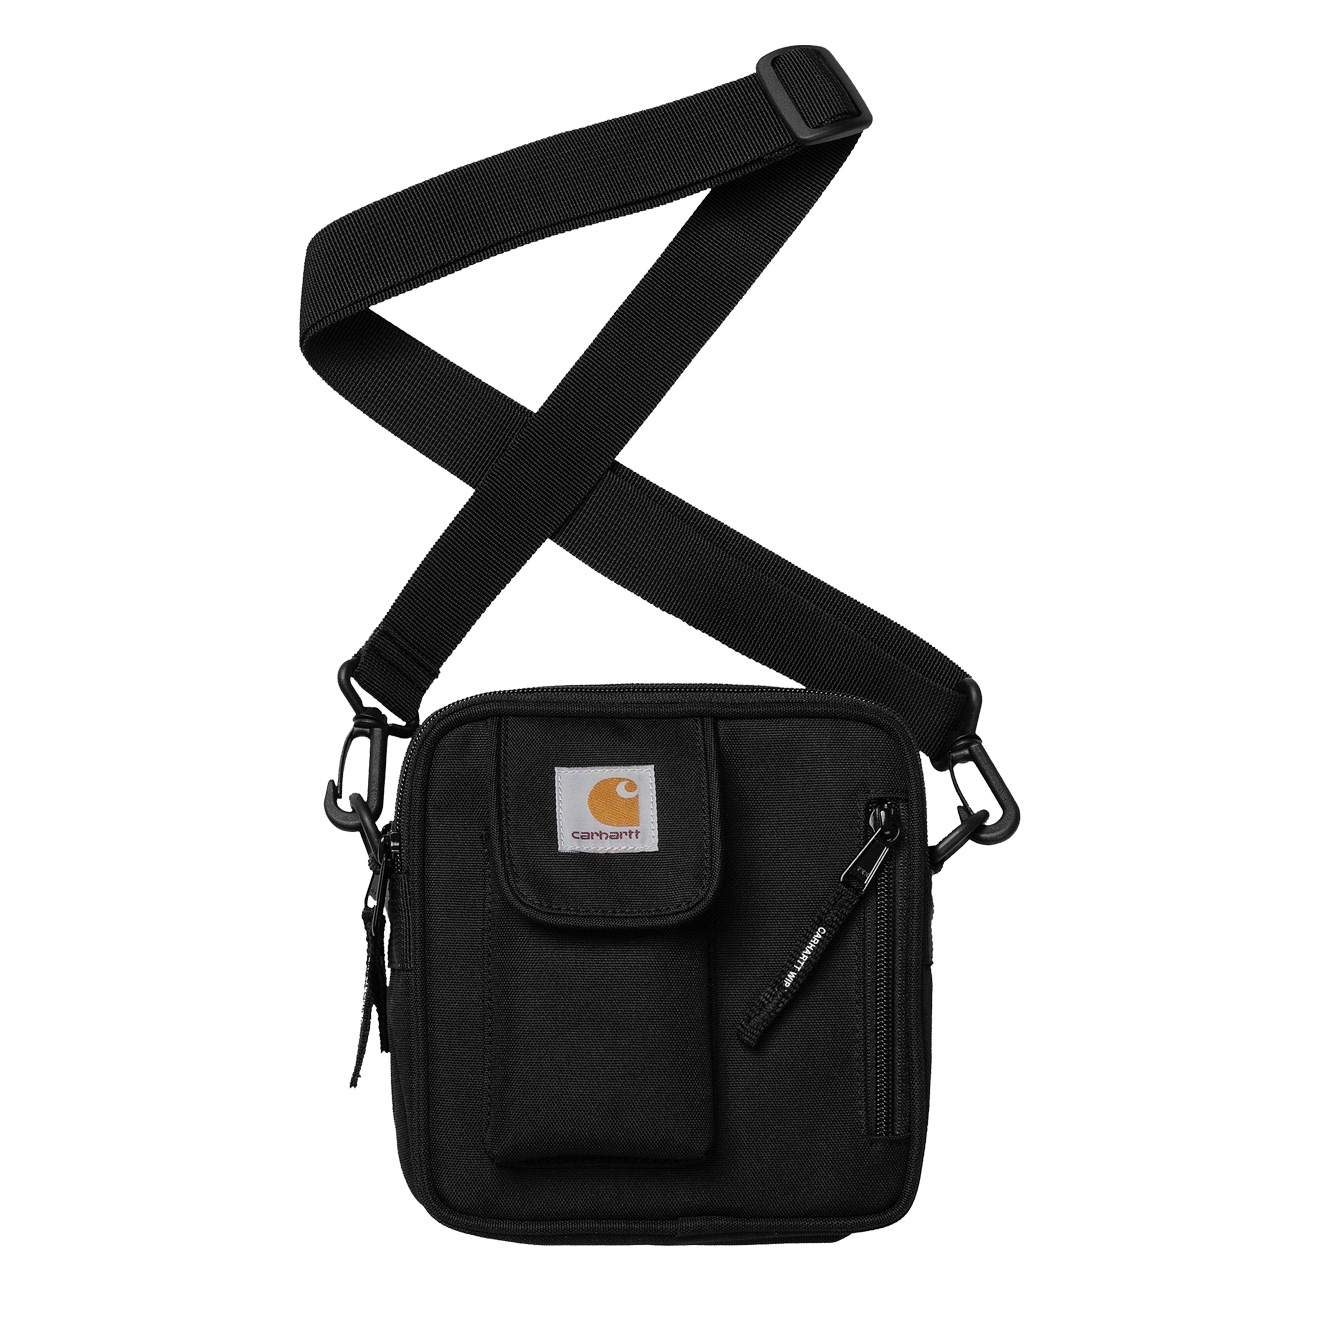 Carhartt Essentials Bag Small Black White One Size